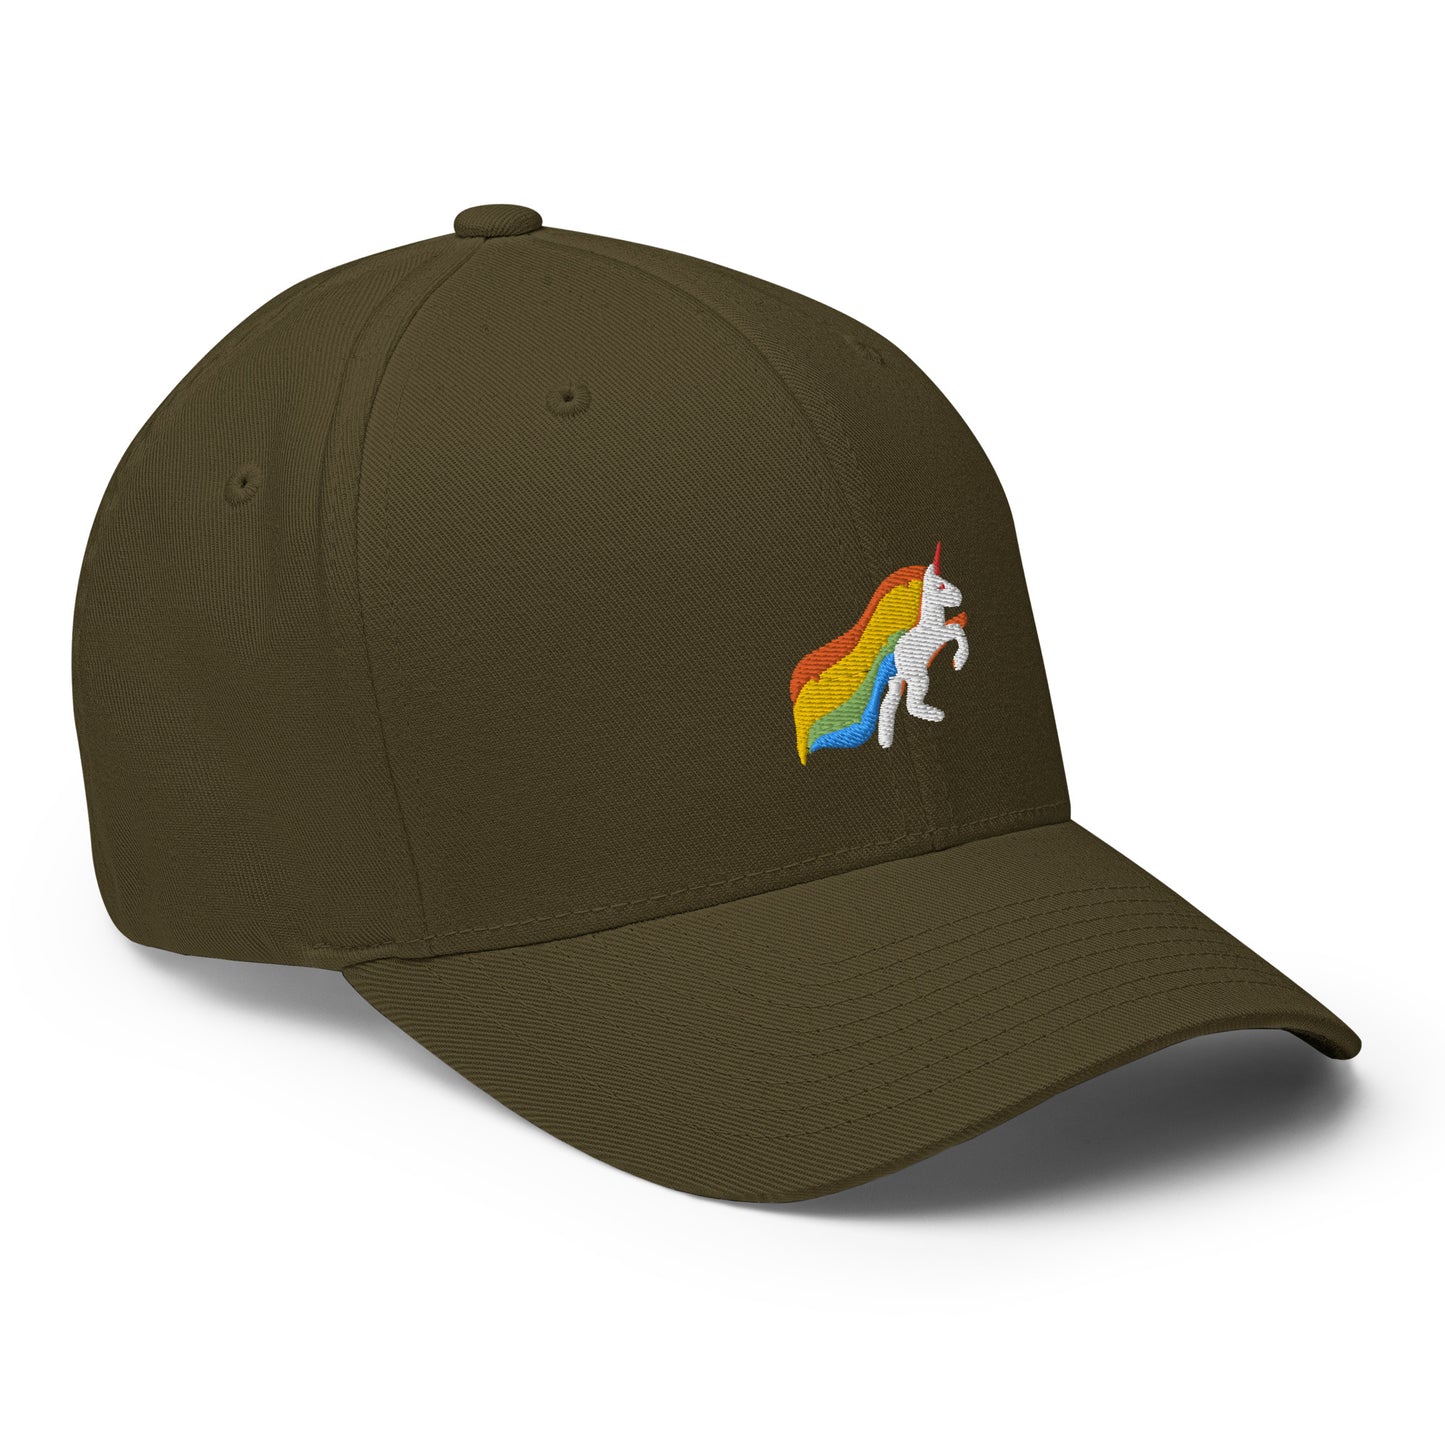 Baseball Cap with Unicorn Pony Symbol